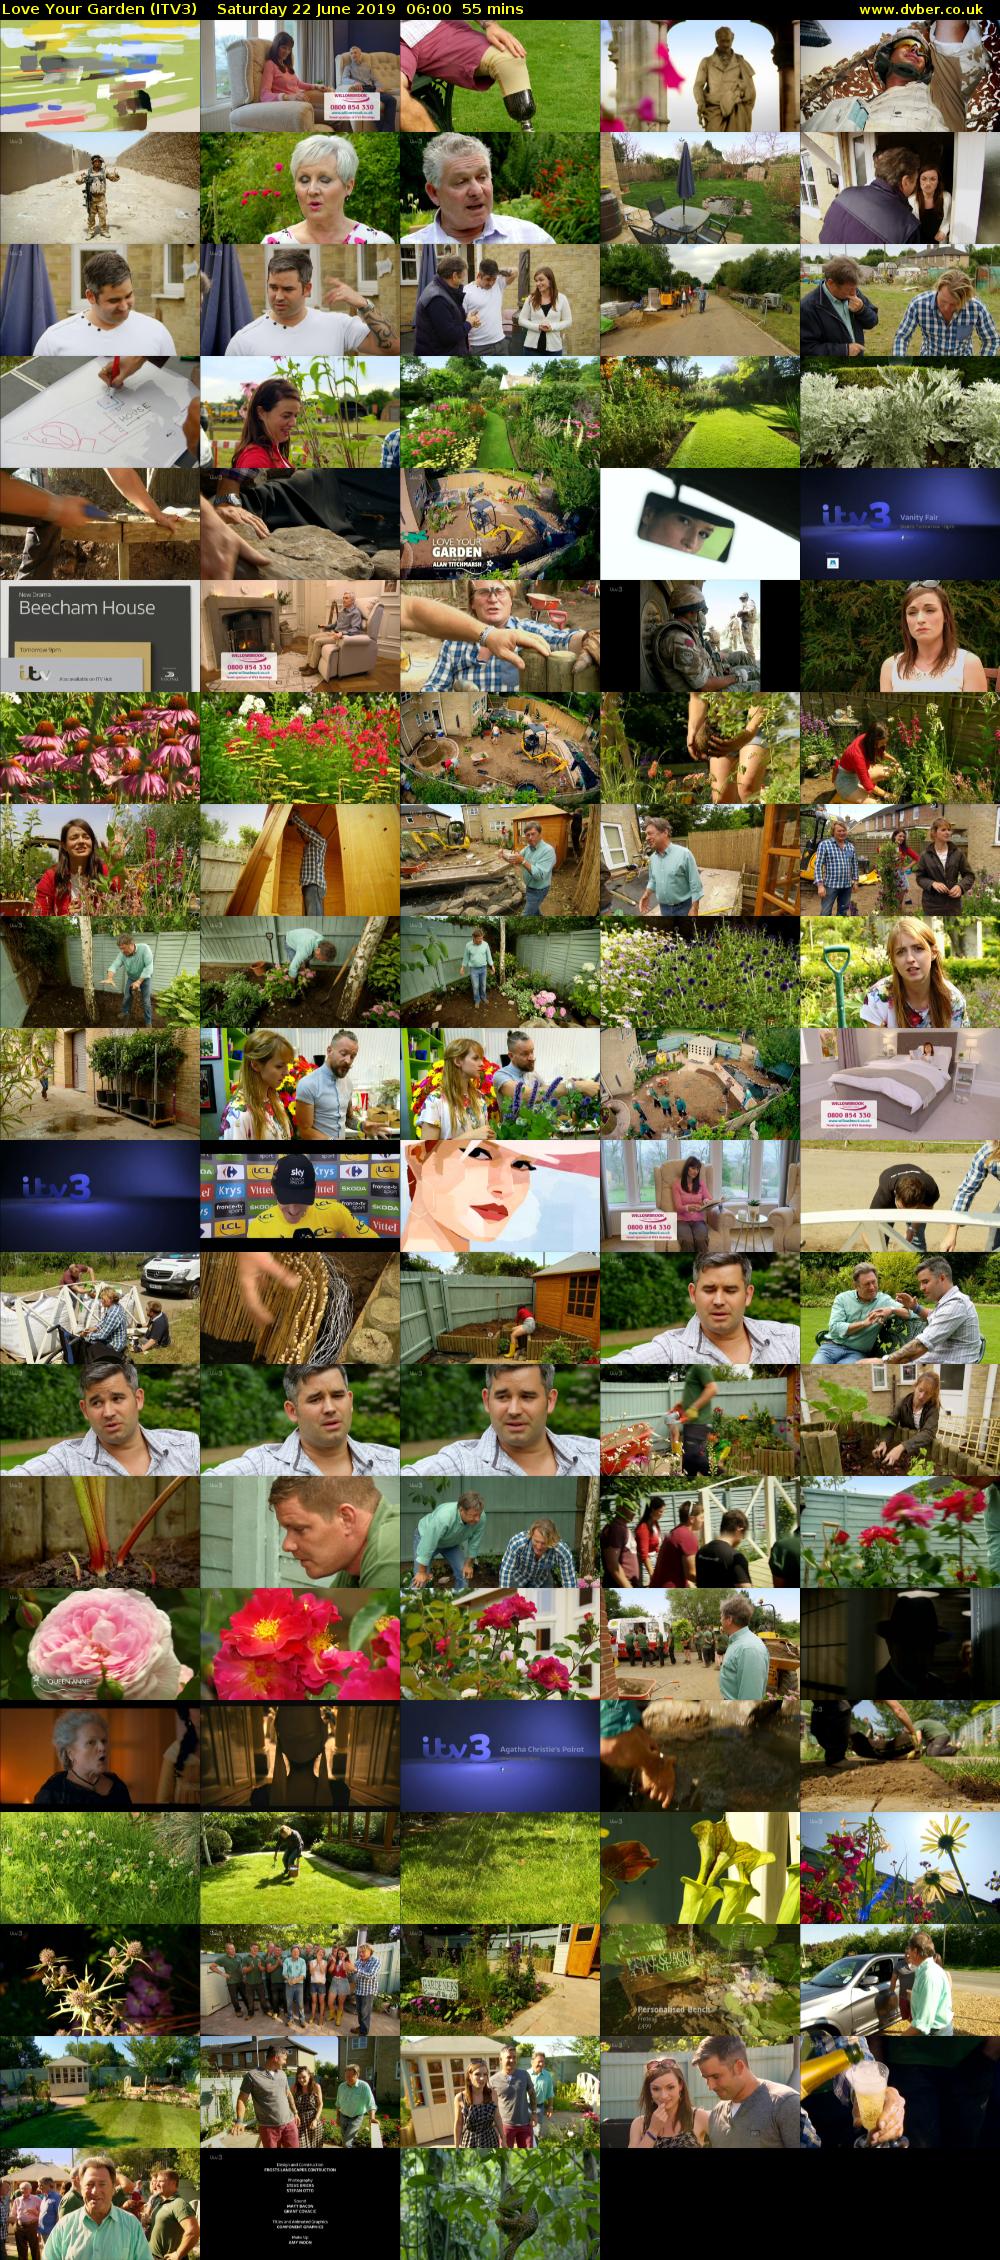 Love Your Garden (ITV3) Saturday 22 June 2019 06:00 - 06:55